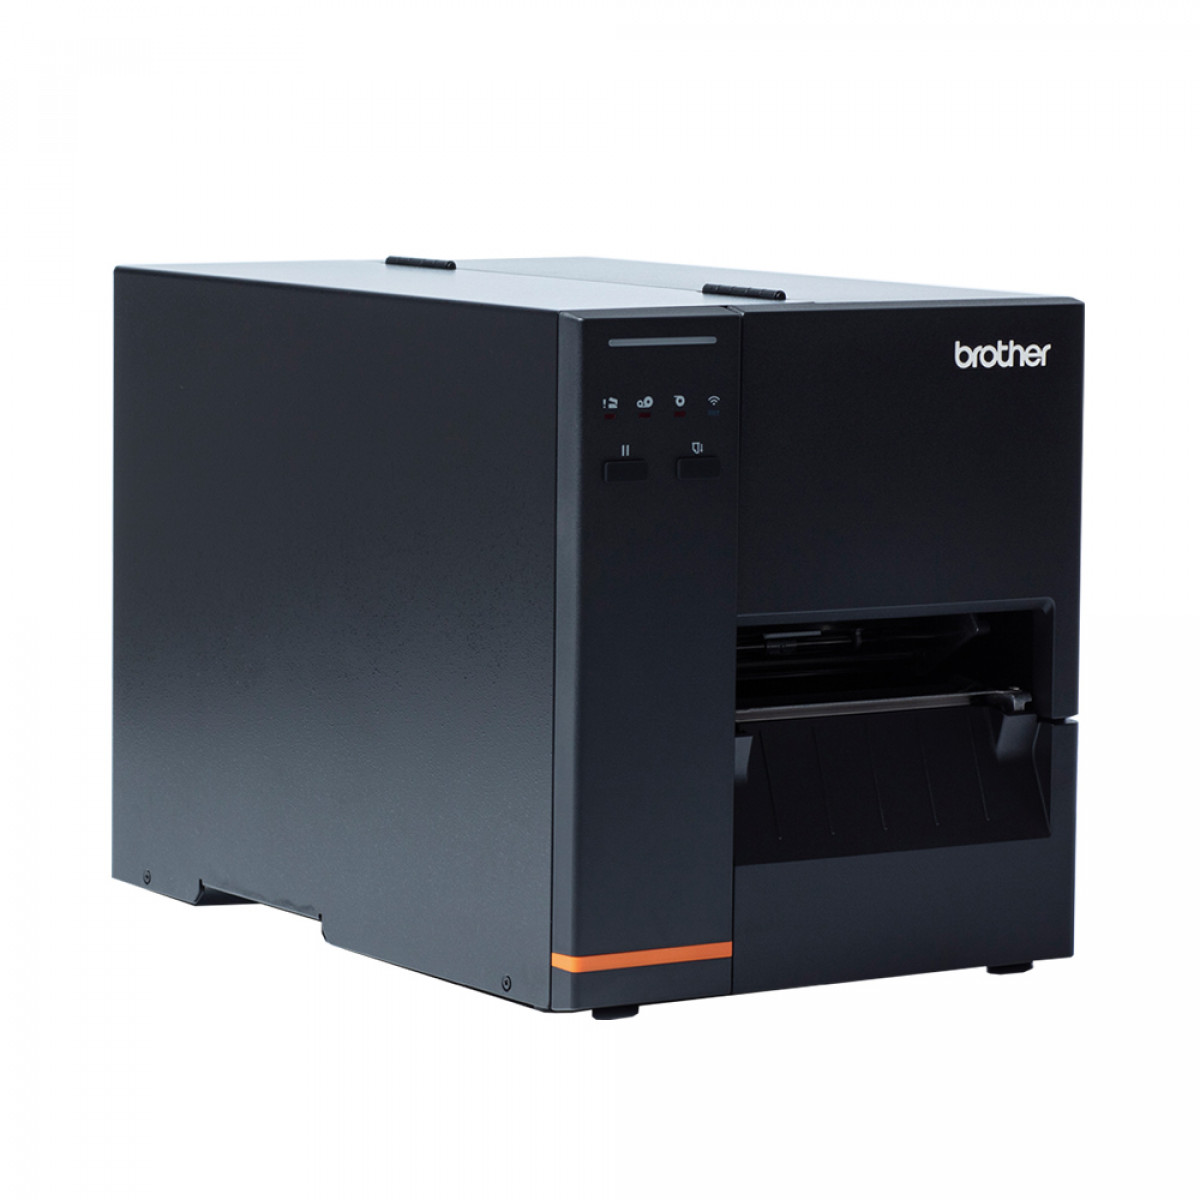 Brother TJ-4020TN - high capacity industrial printer